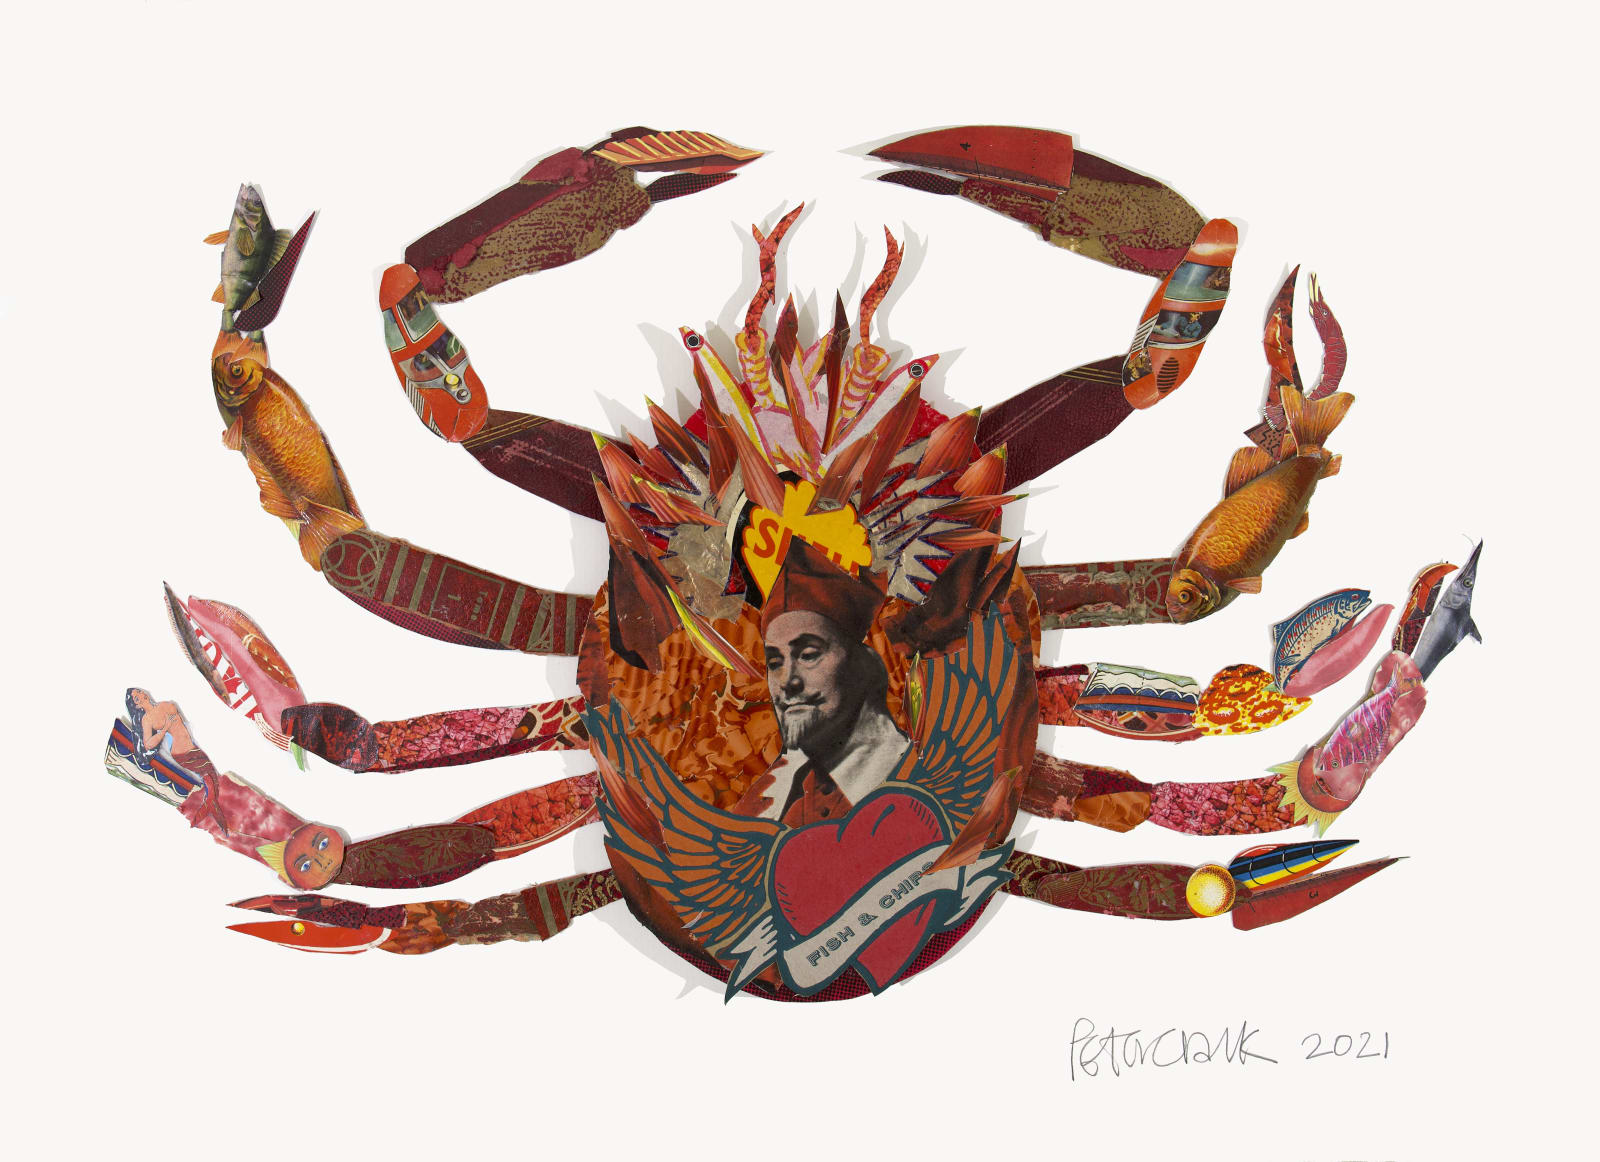 Peter Clark, Hot Crab